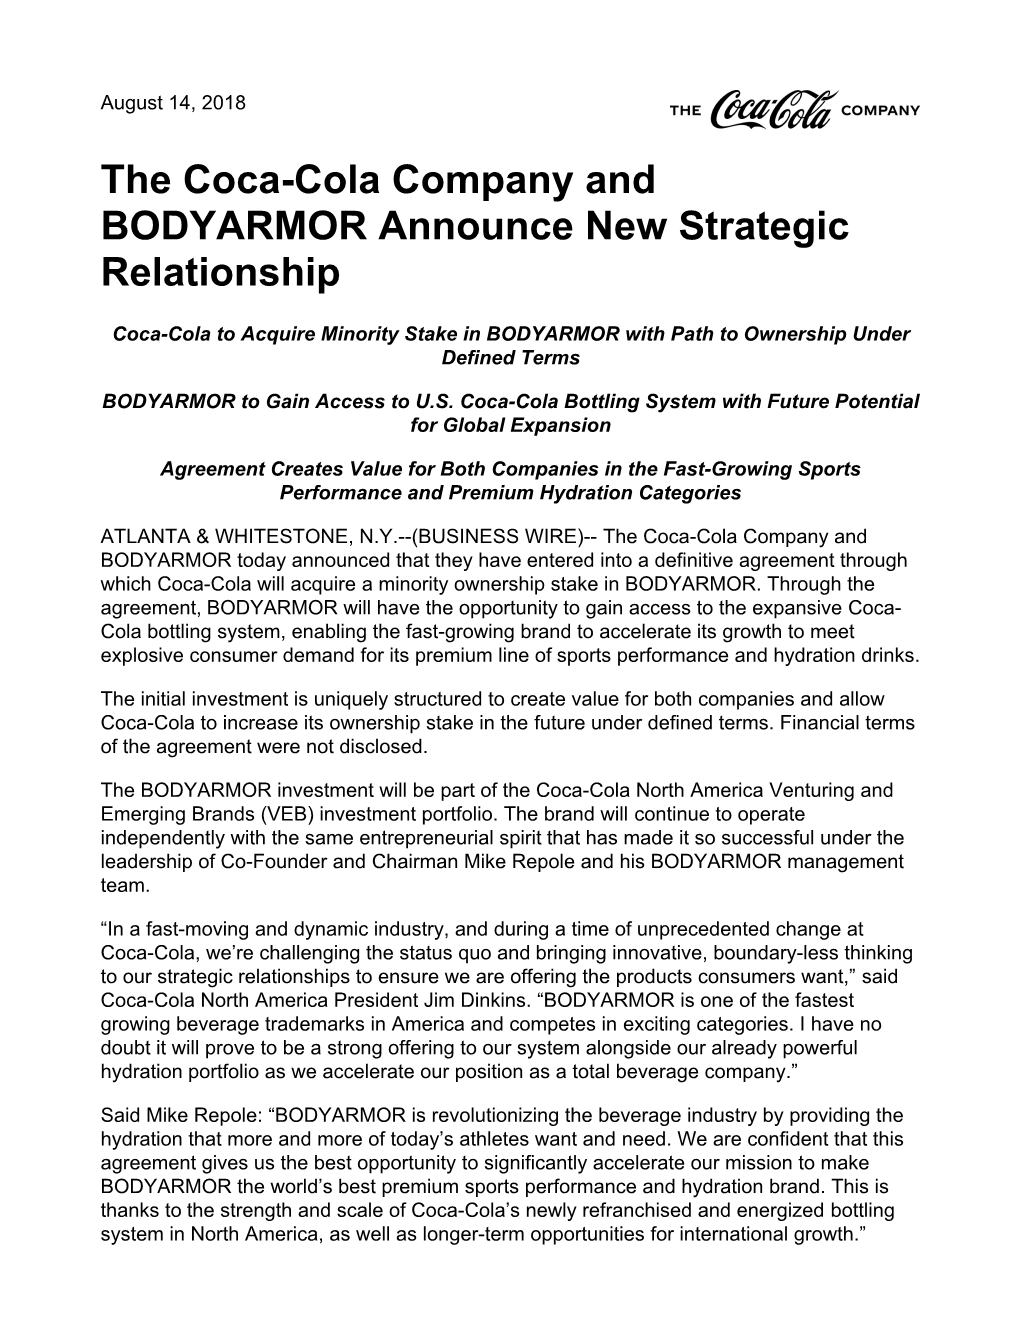 The Coca-Cola Company and BODYARMOR Announce New Strategic Relationship